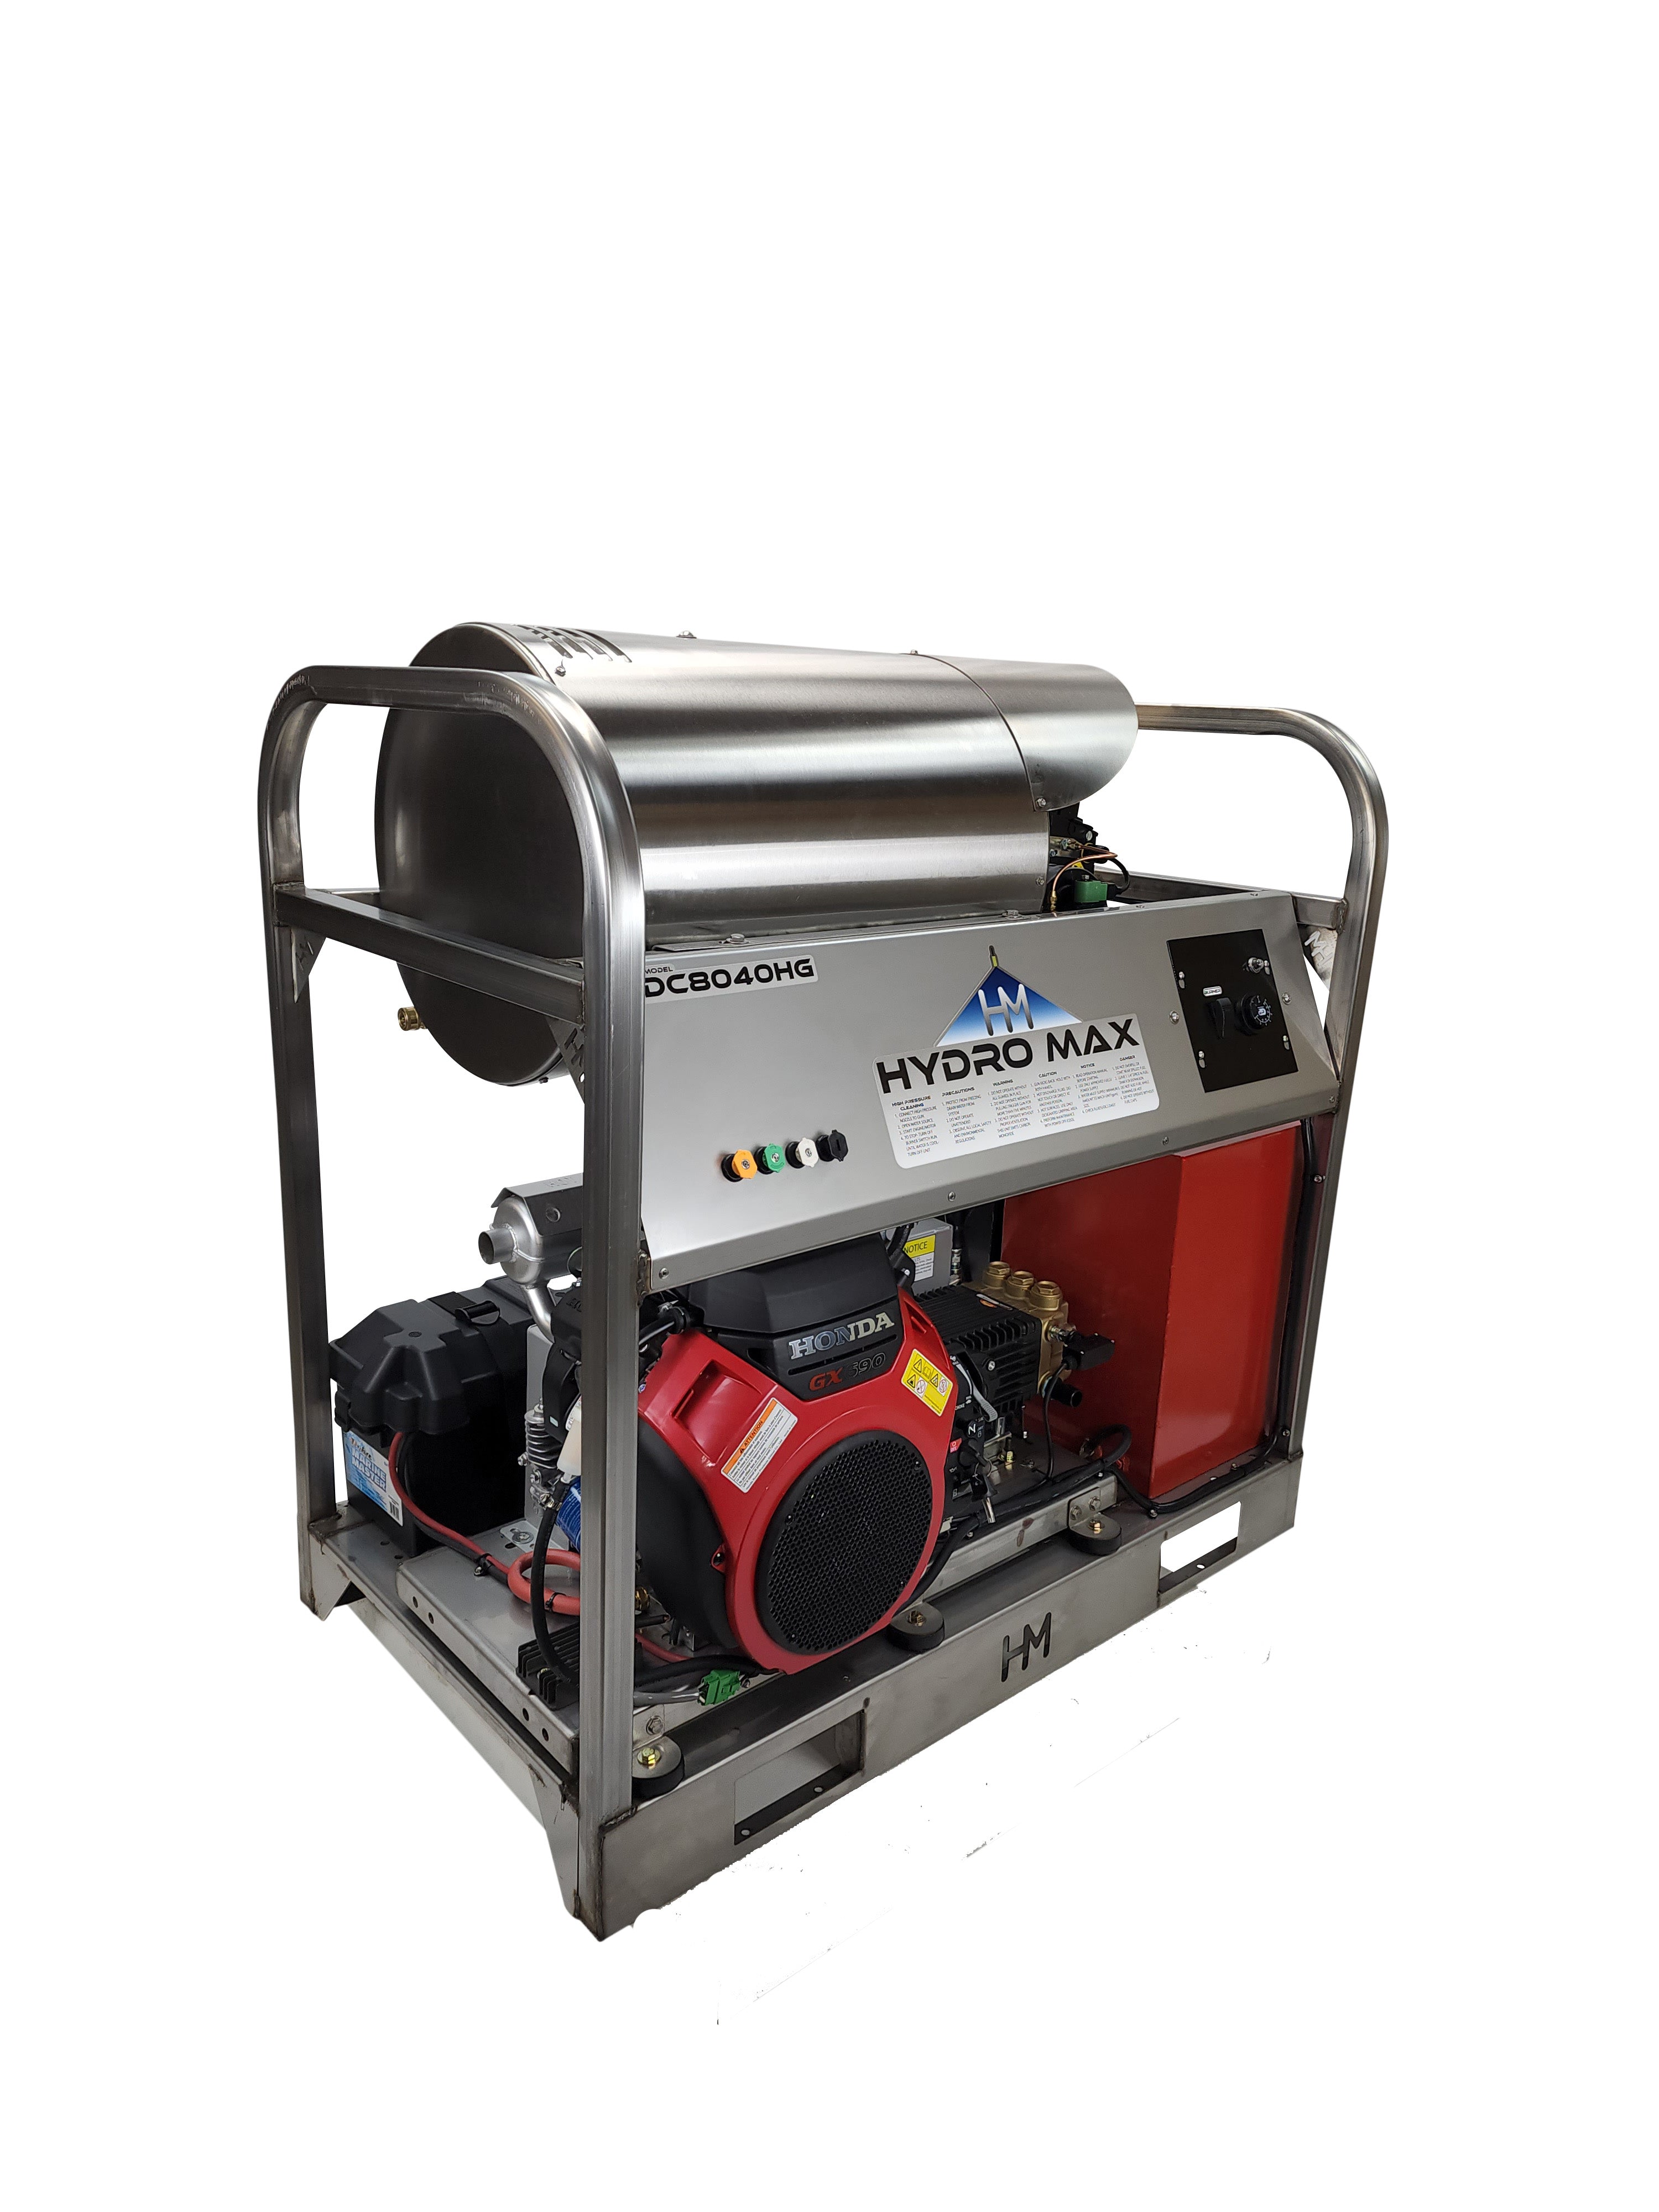 Hot Water Pressure Washers- Gas/Diesel Engine Driven